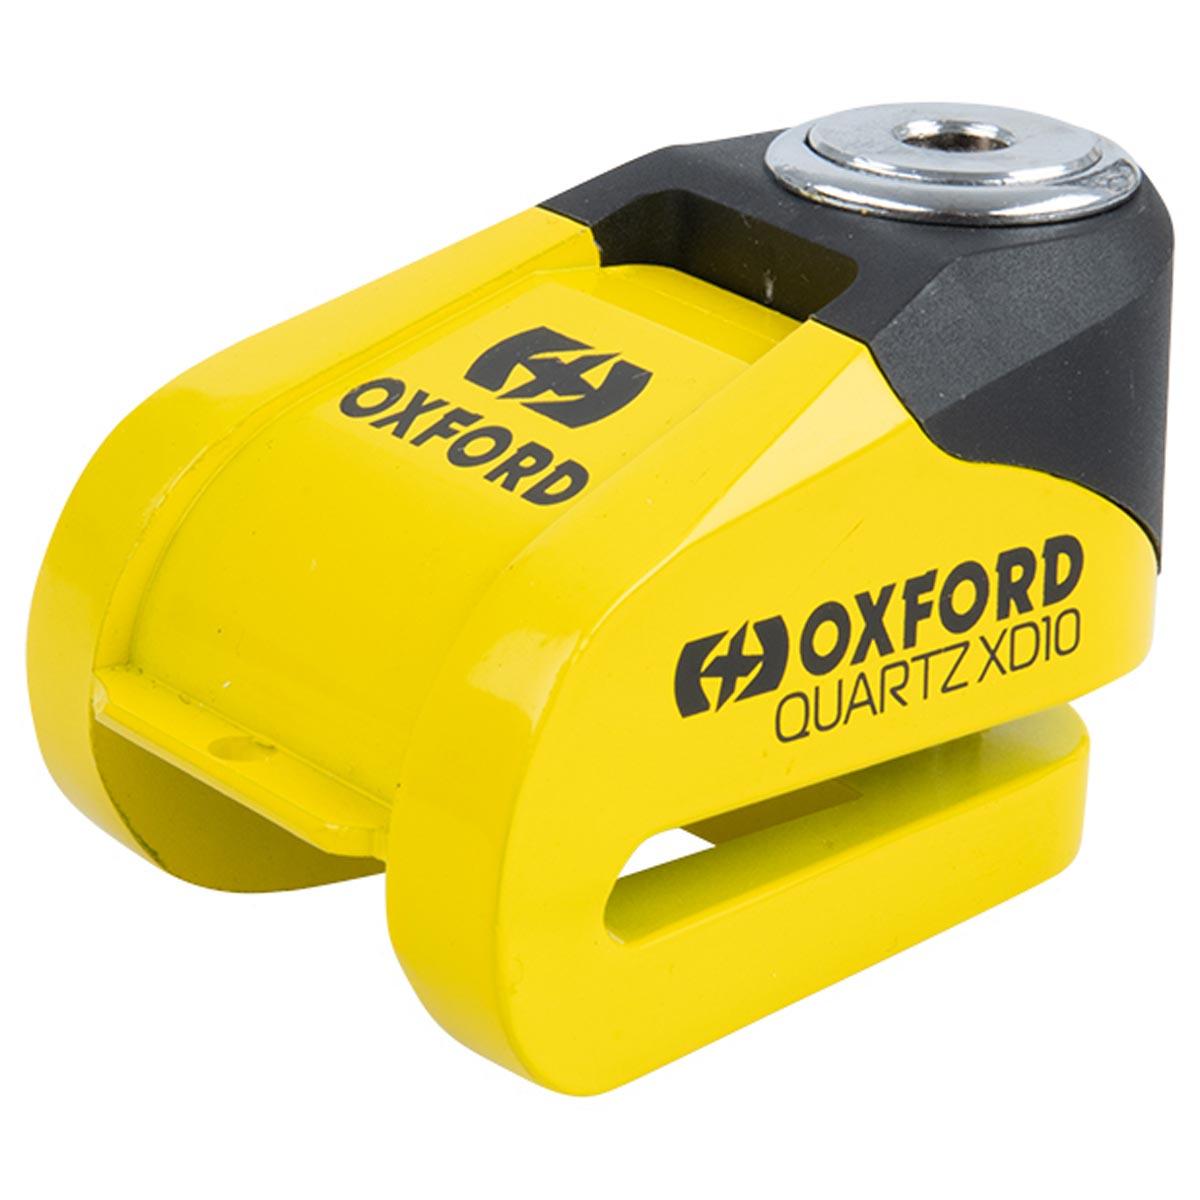 Oxford Quartz XD10 Disc Lock - Yellow